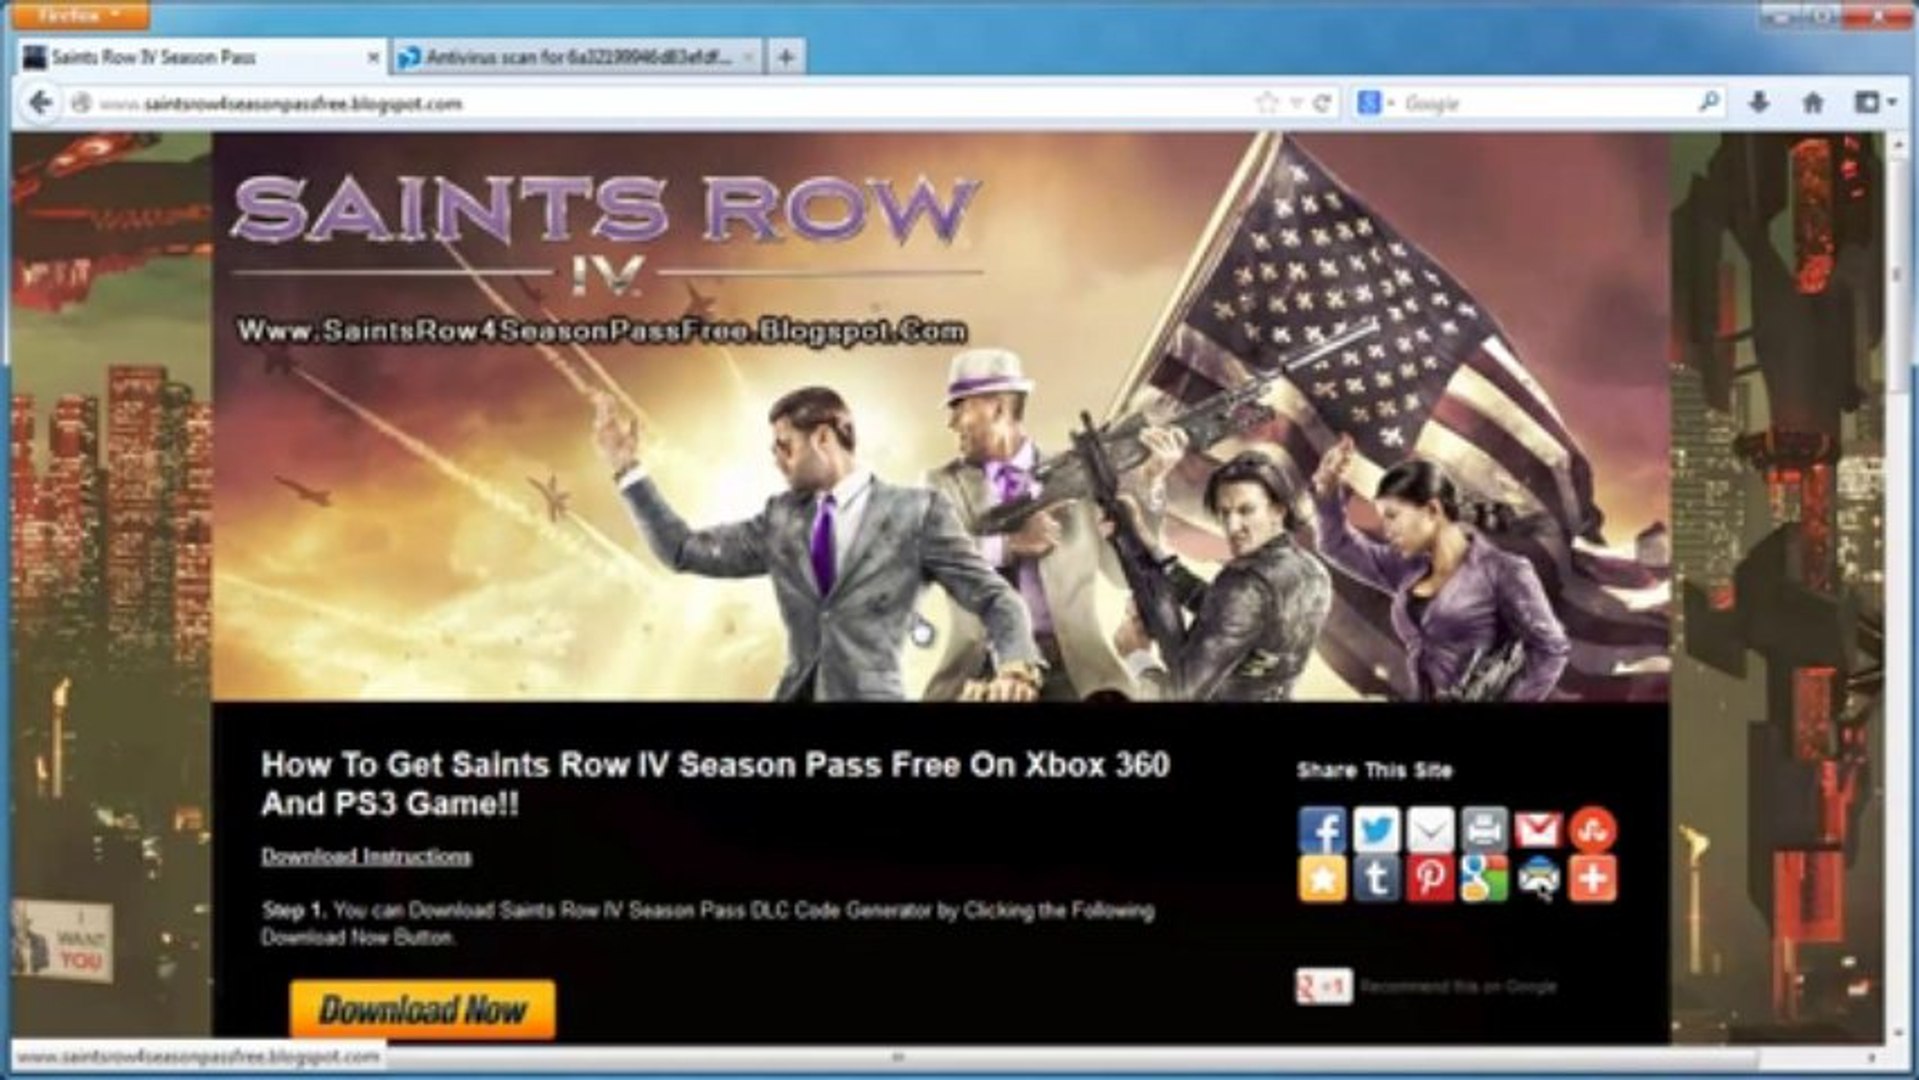 Saints Row 4 Season Pass Code Free - Xbox 360 PS3 - video Dailymotion